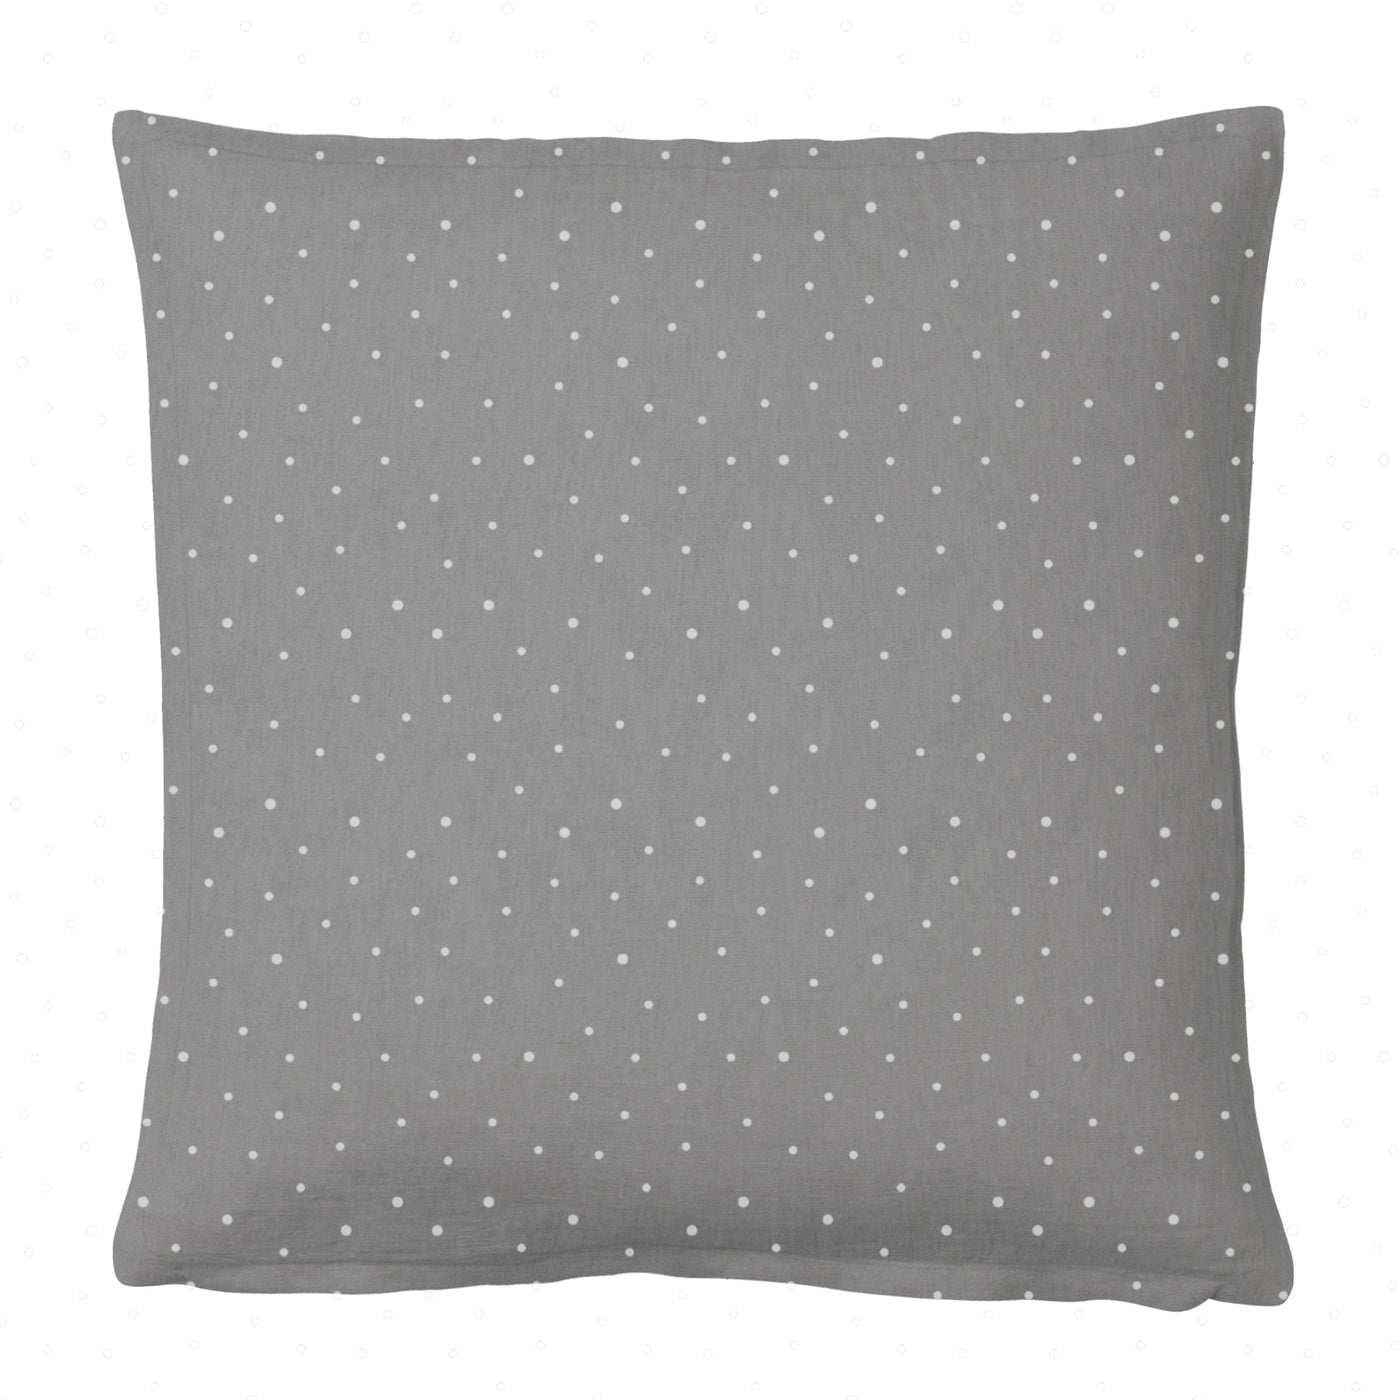 Dots gray pillow